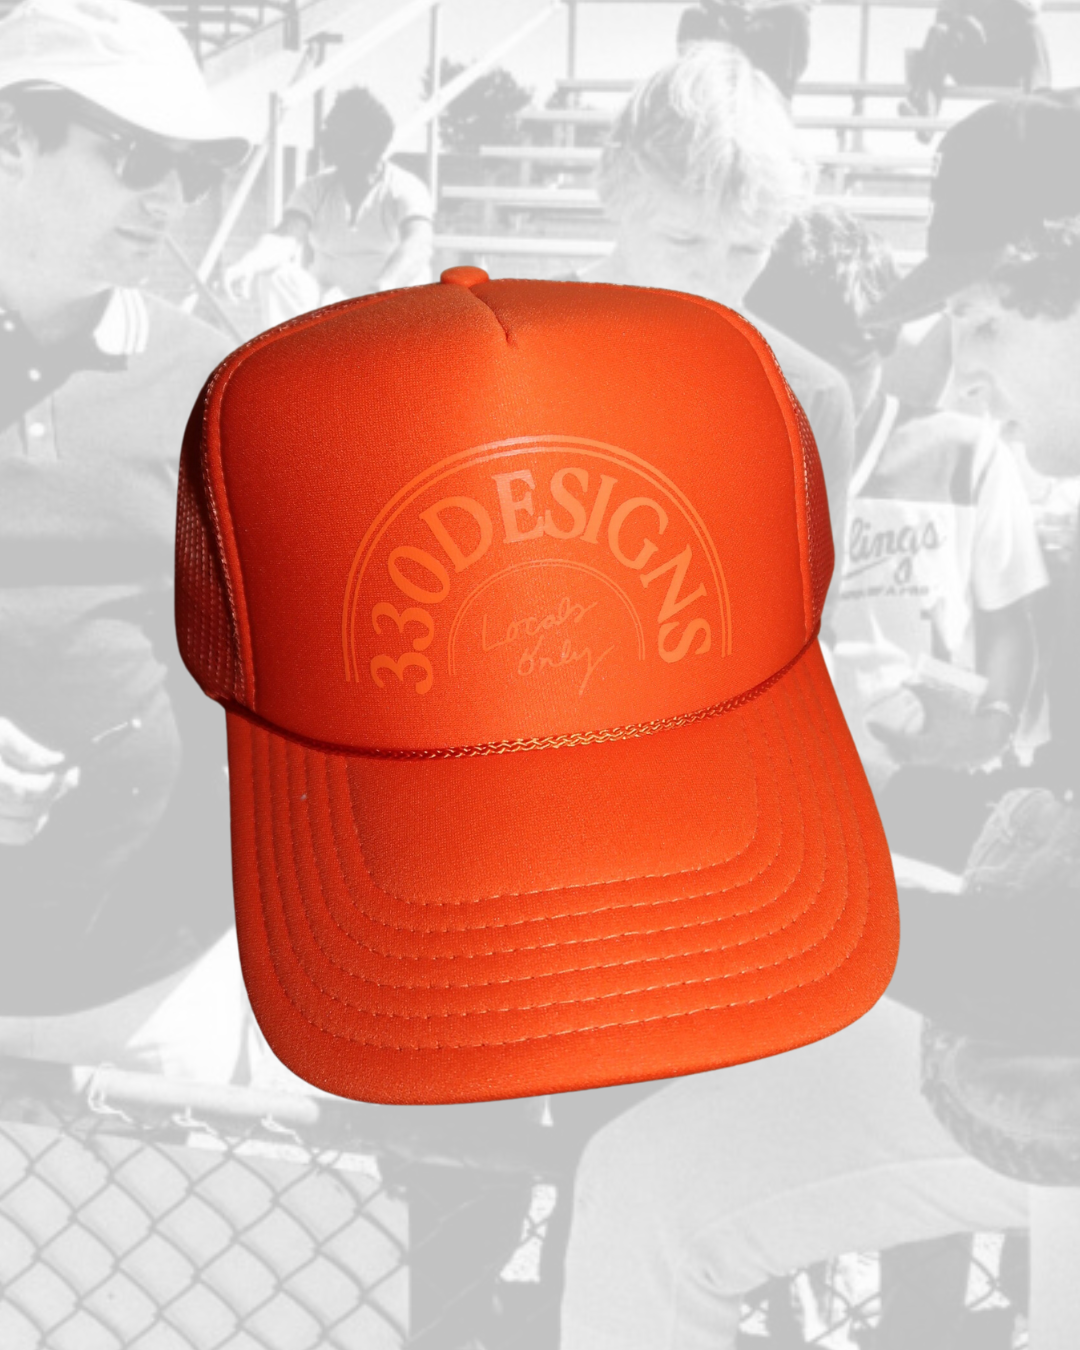 330Designs Match Made Mono Foam Trucker Hat